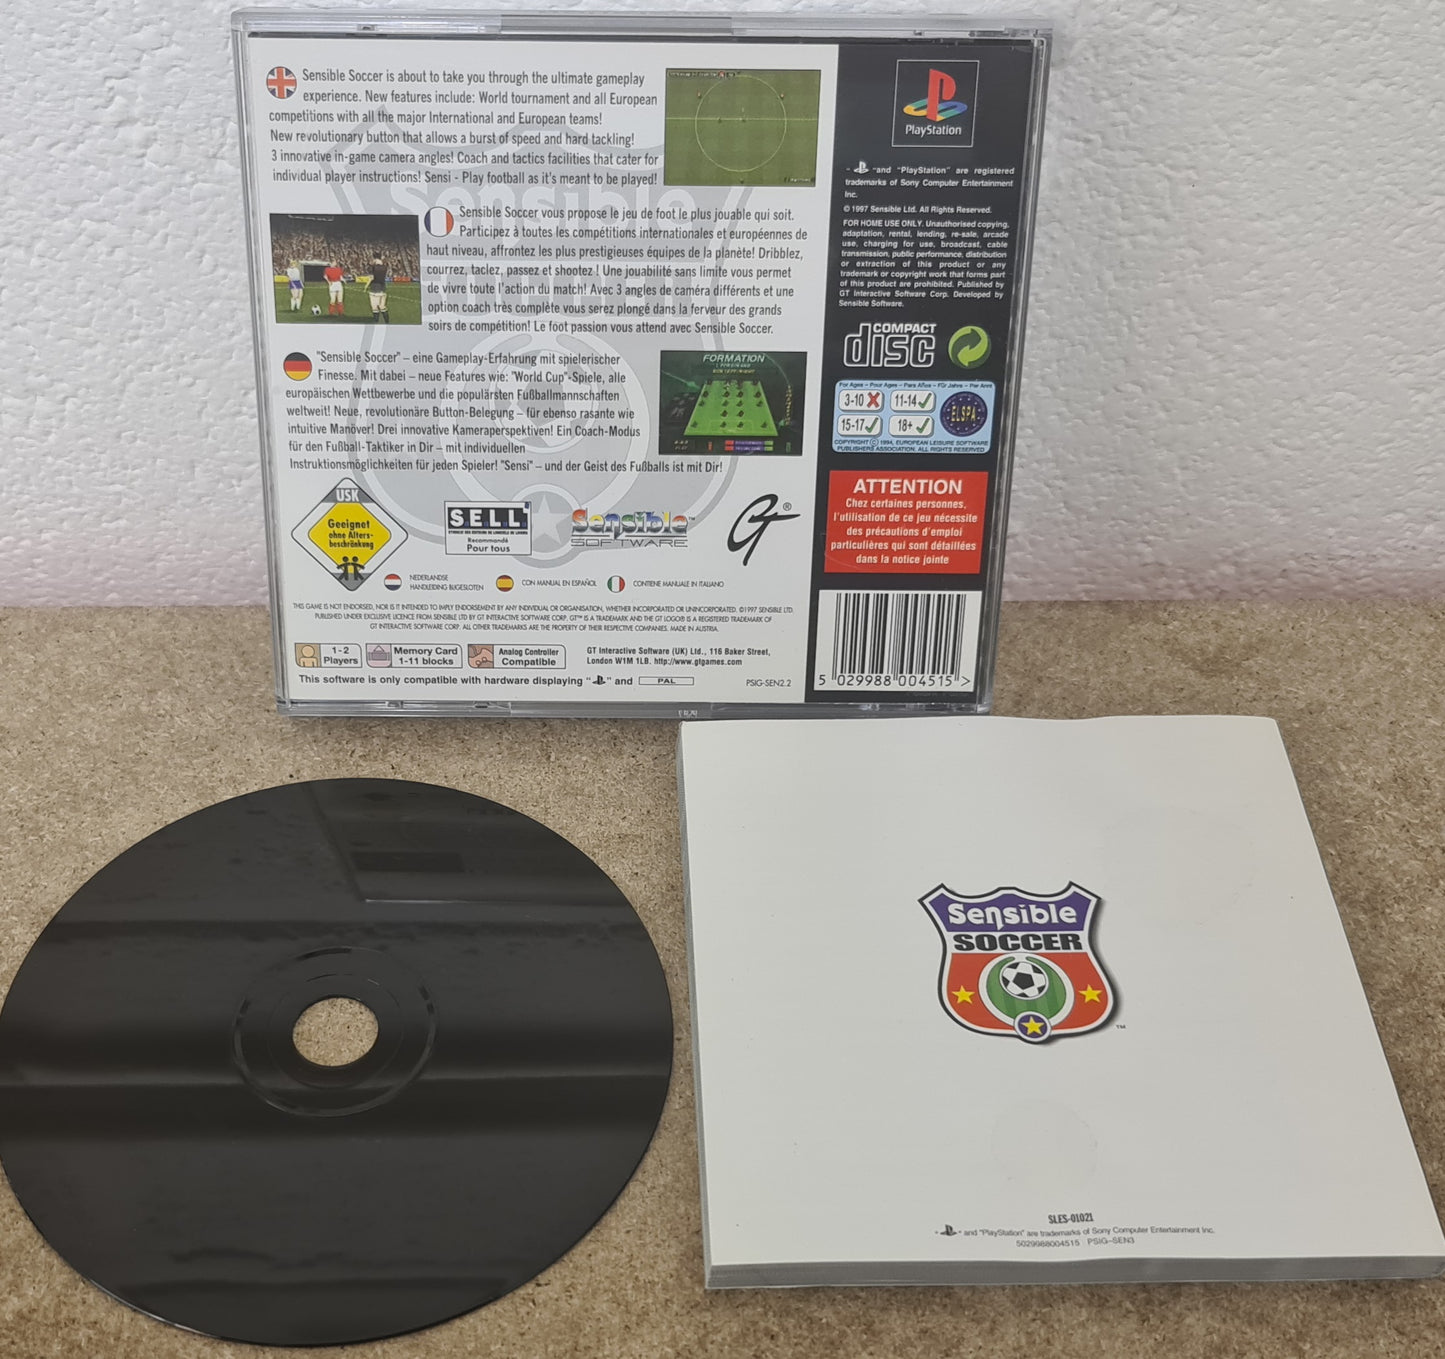 Sensible Soccer Sony Playstation 1 (PS1) Game